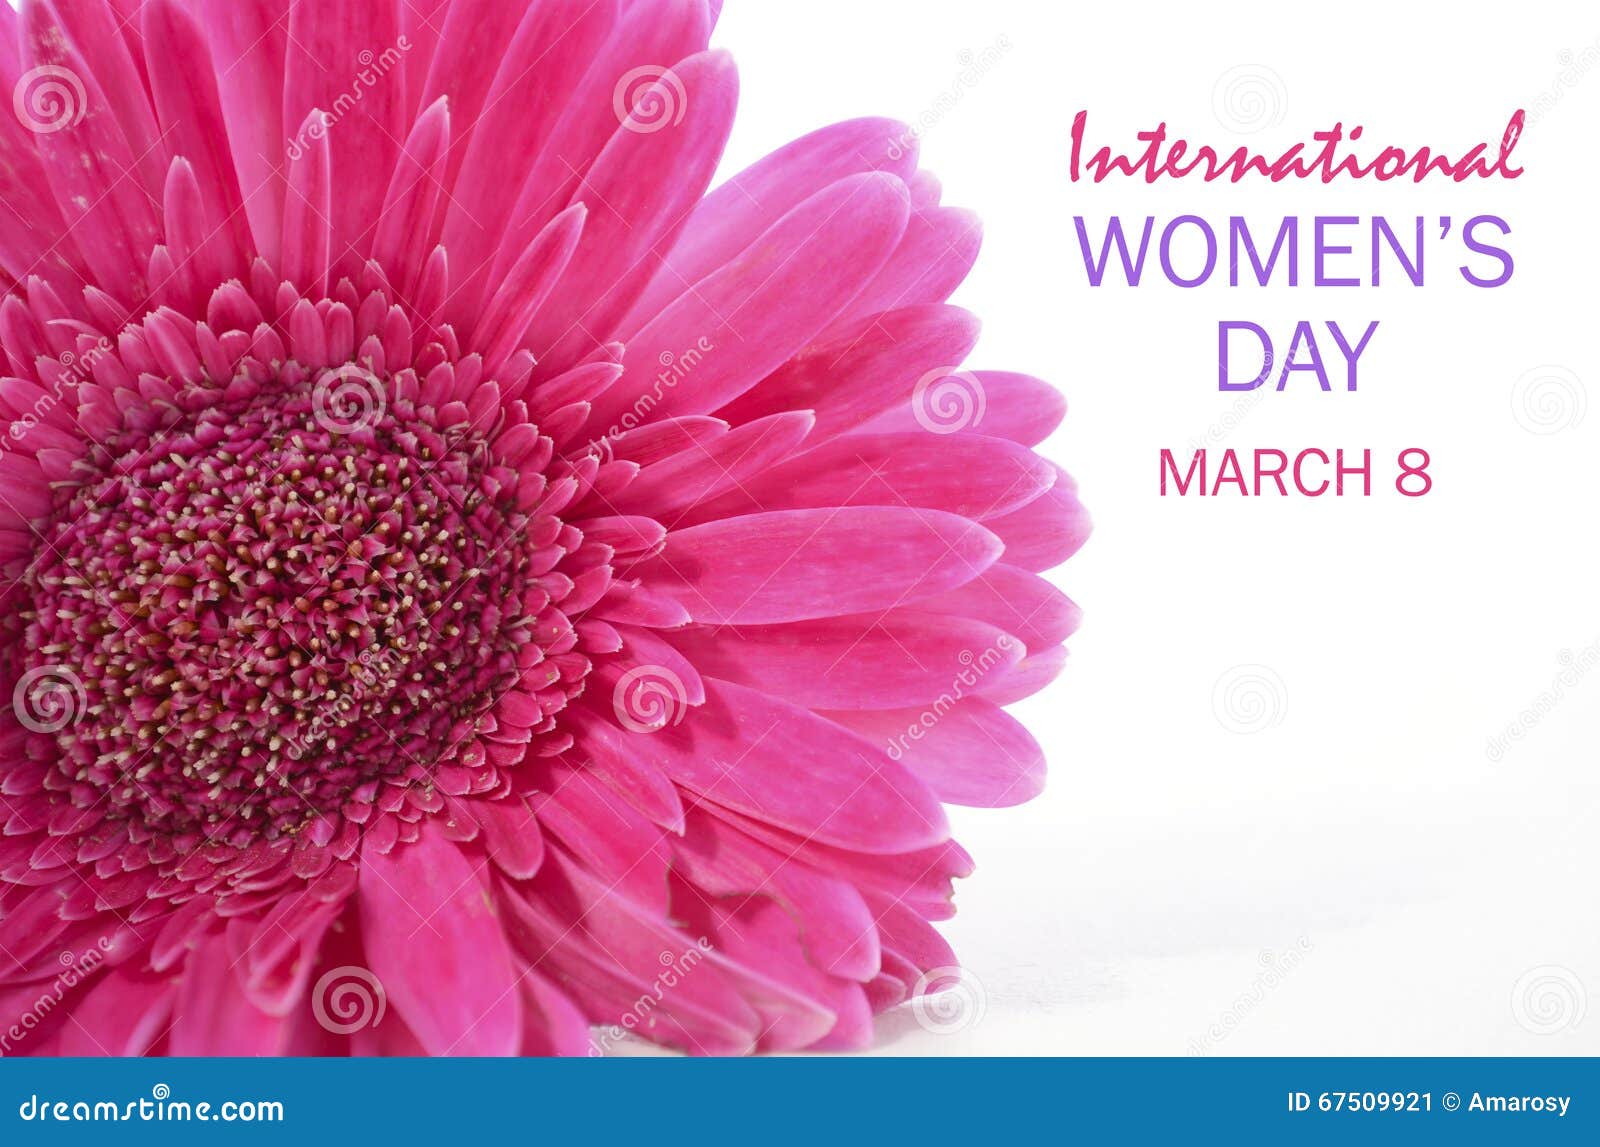 international womens day pink gerbera